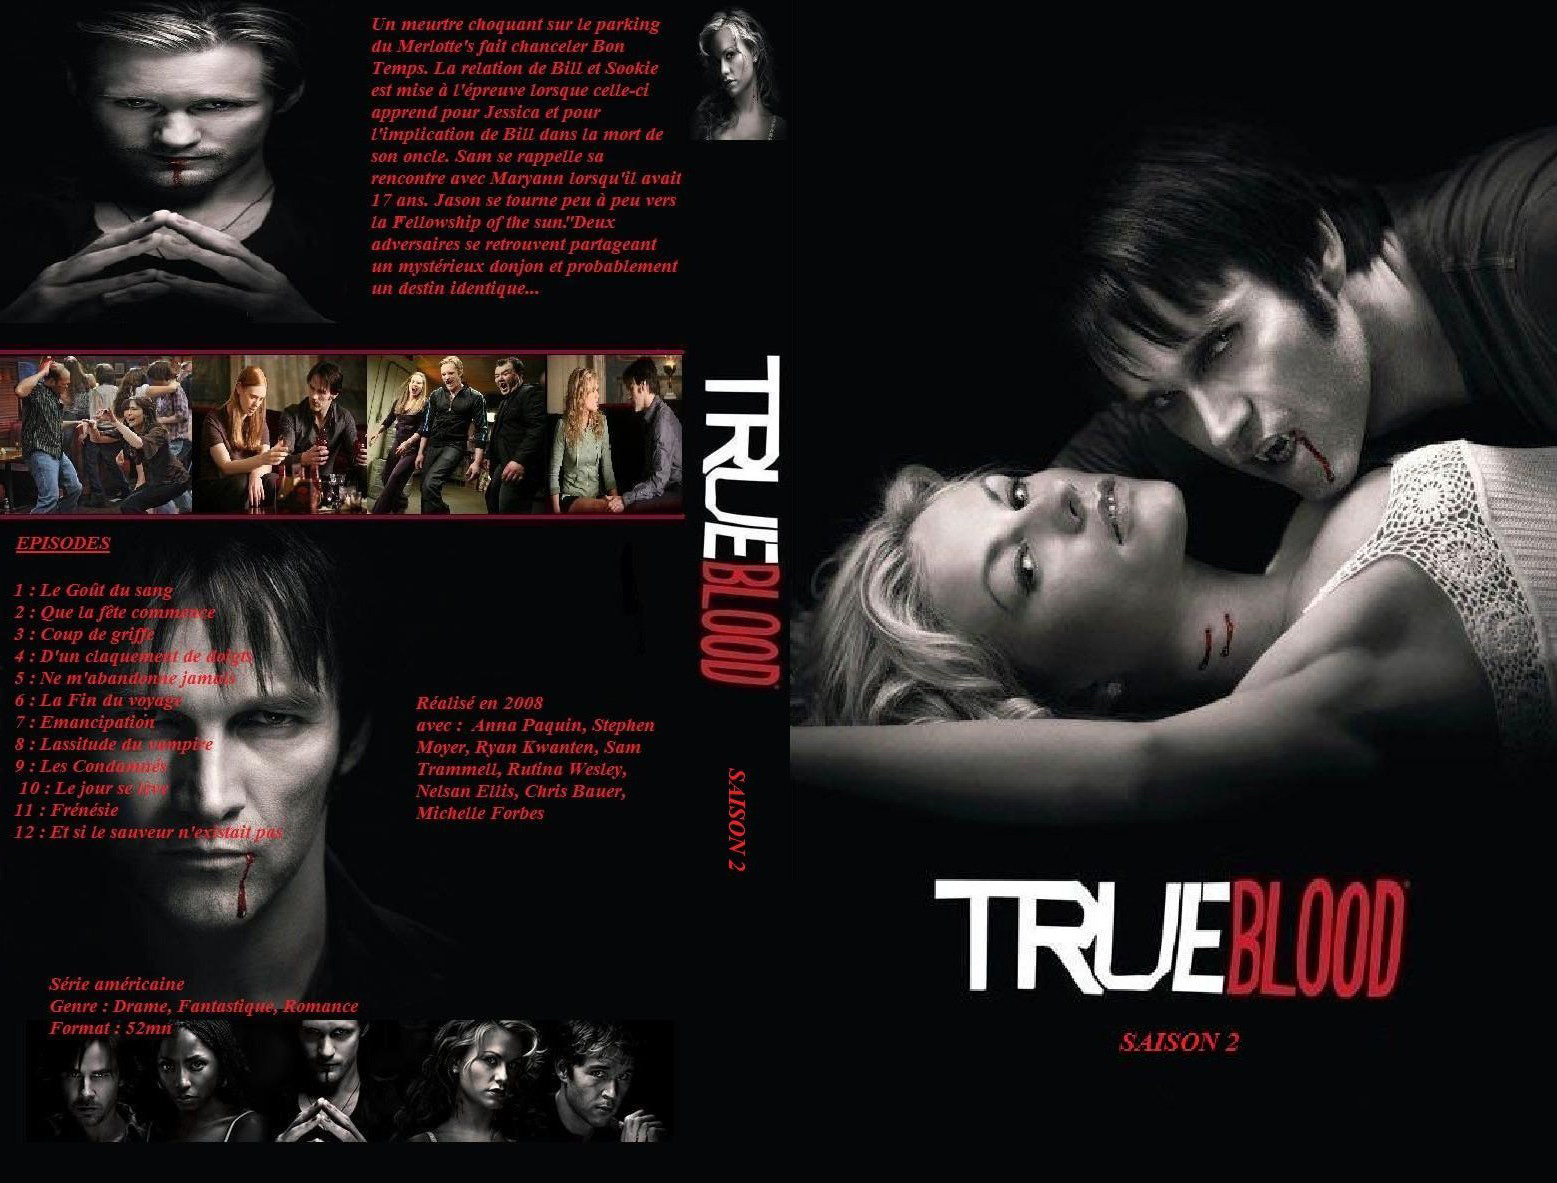 Jaquette DVD True blood saison 2 custom